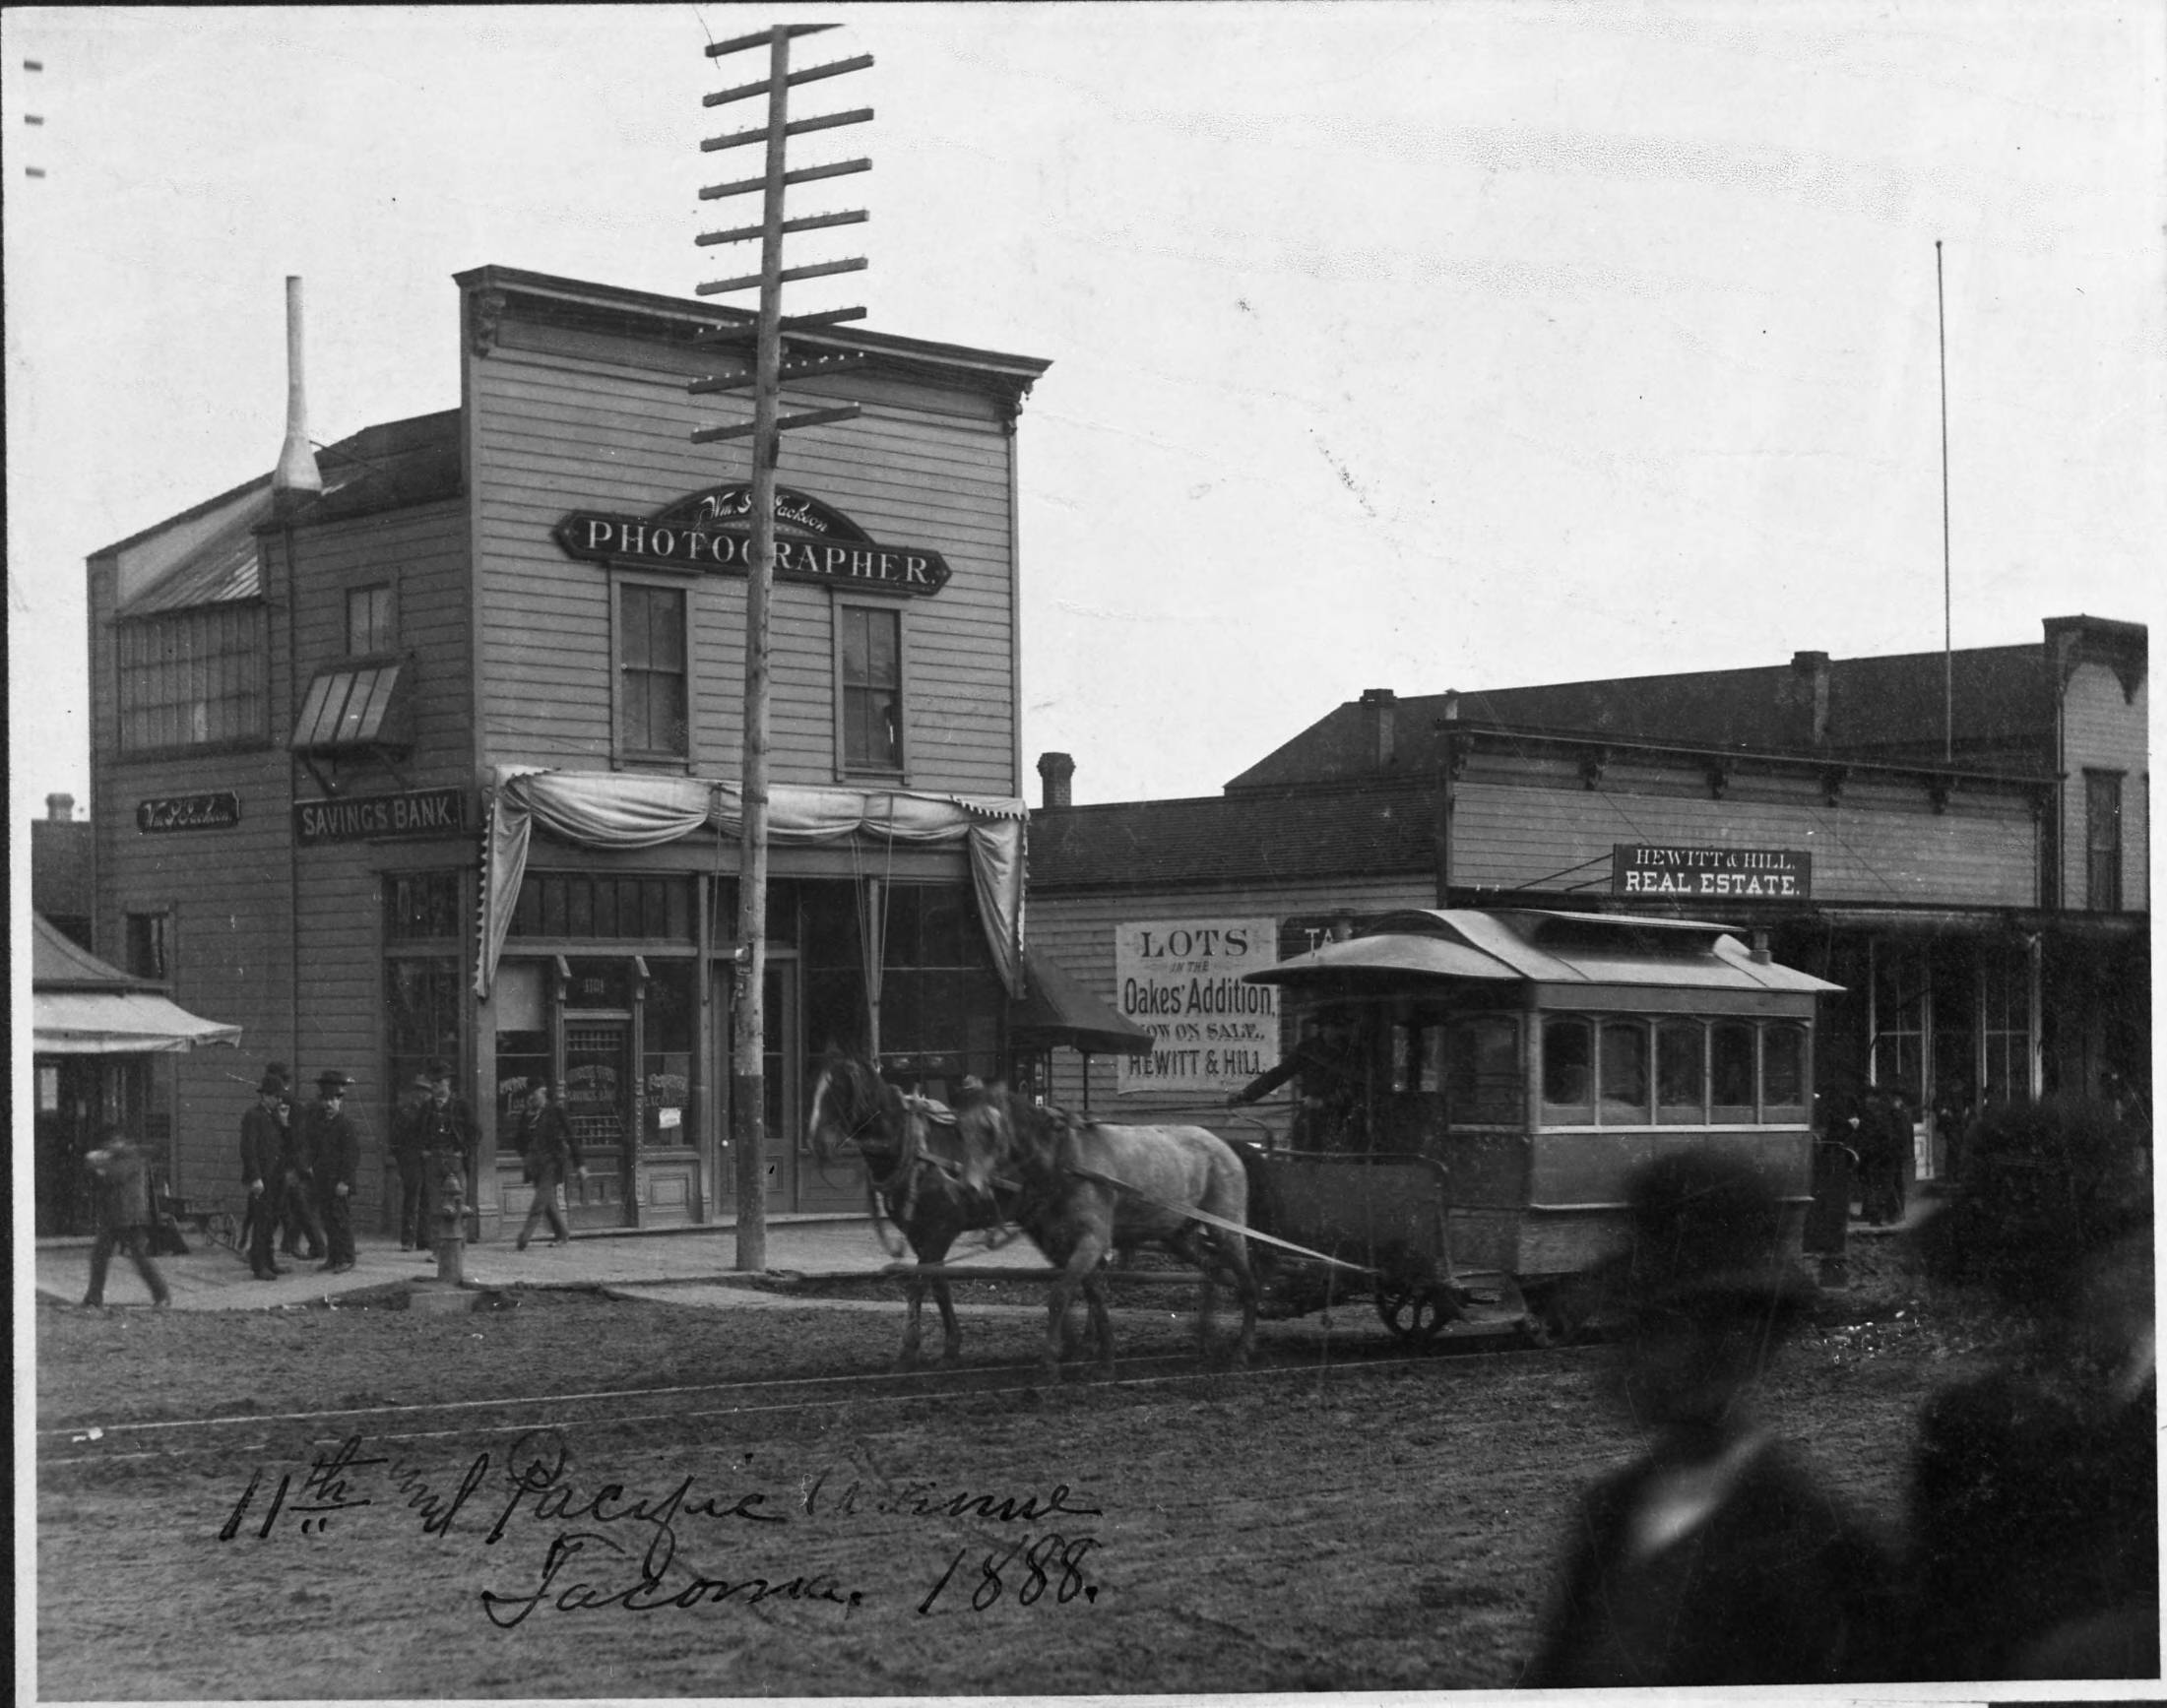 Tacoma's First Street Railway